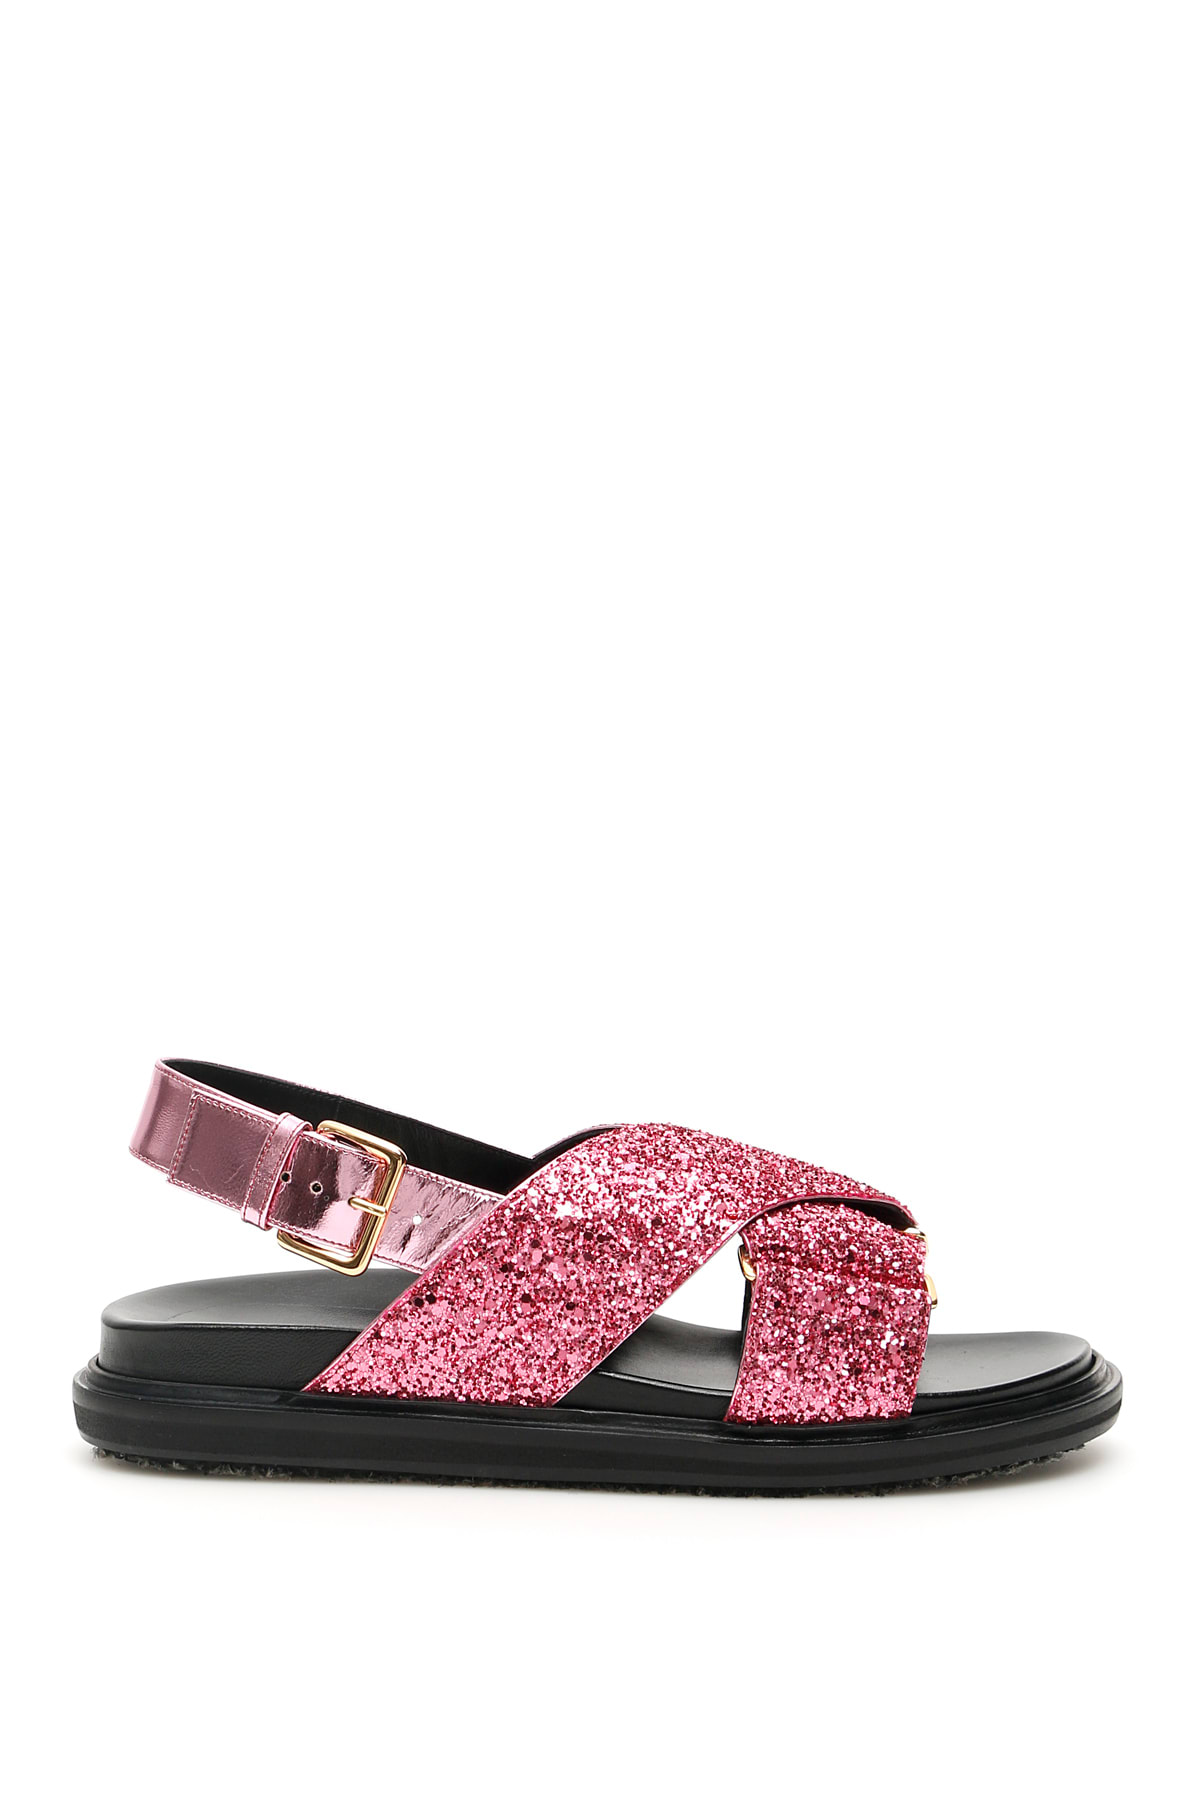 Photo of  Marni Fussbett Glitter Sandals- shop Marni Sandals online sales